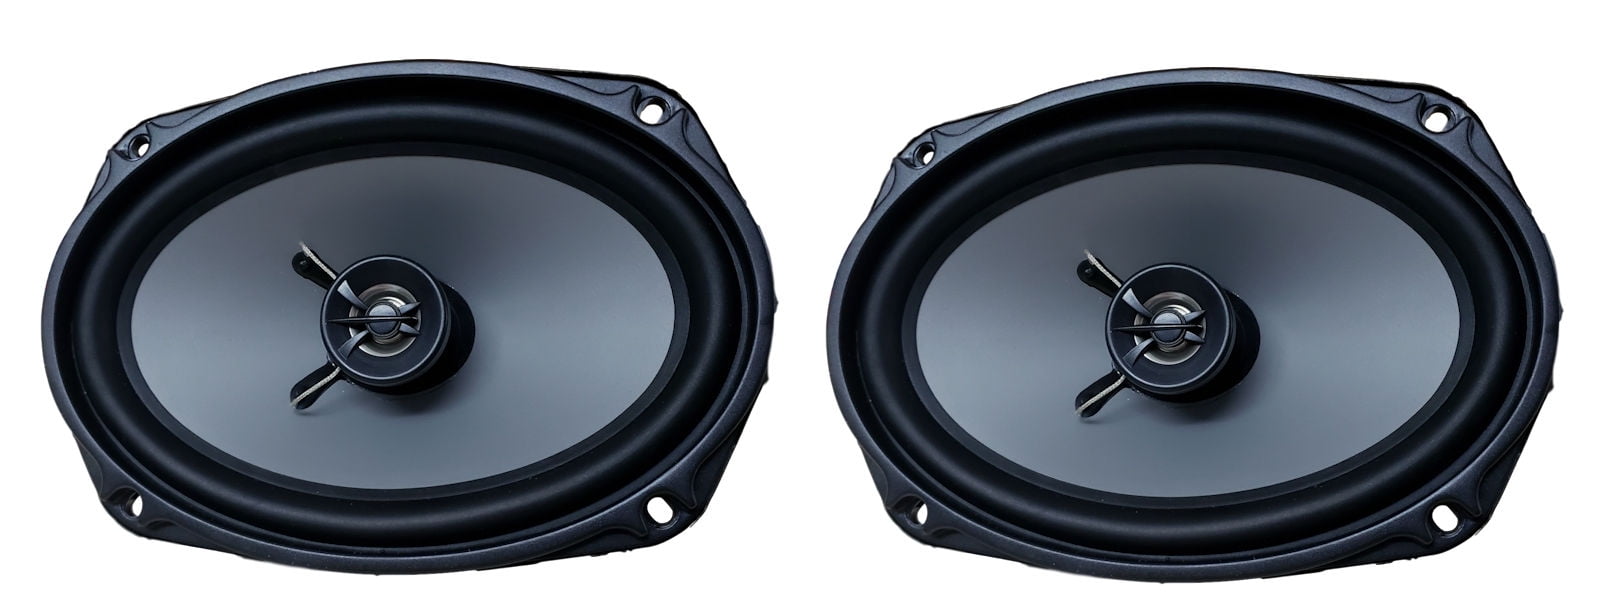 LAIKOU Car Door Speaker Decoration Cover Ring Trim Audio Surround Interior Accessories for 2011-2021 Dodge Charger White 